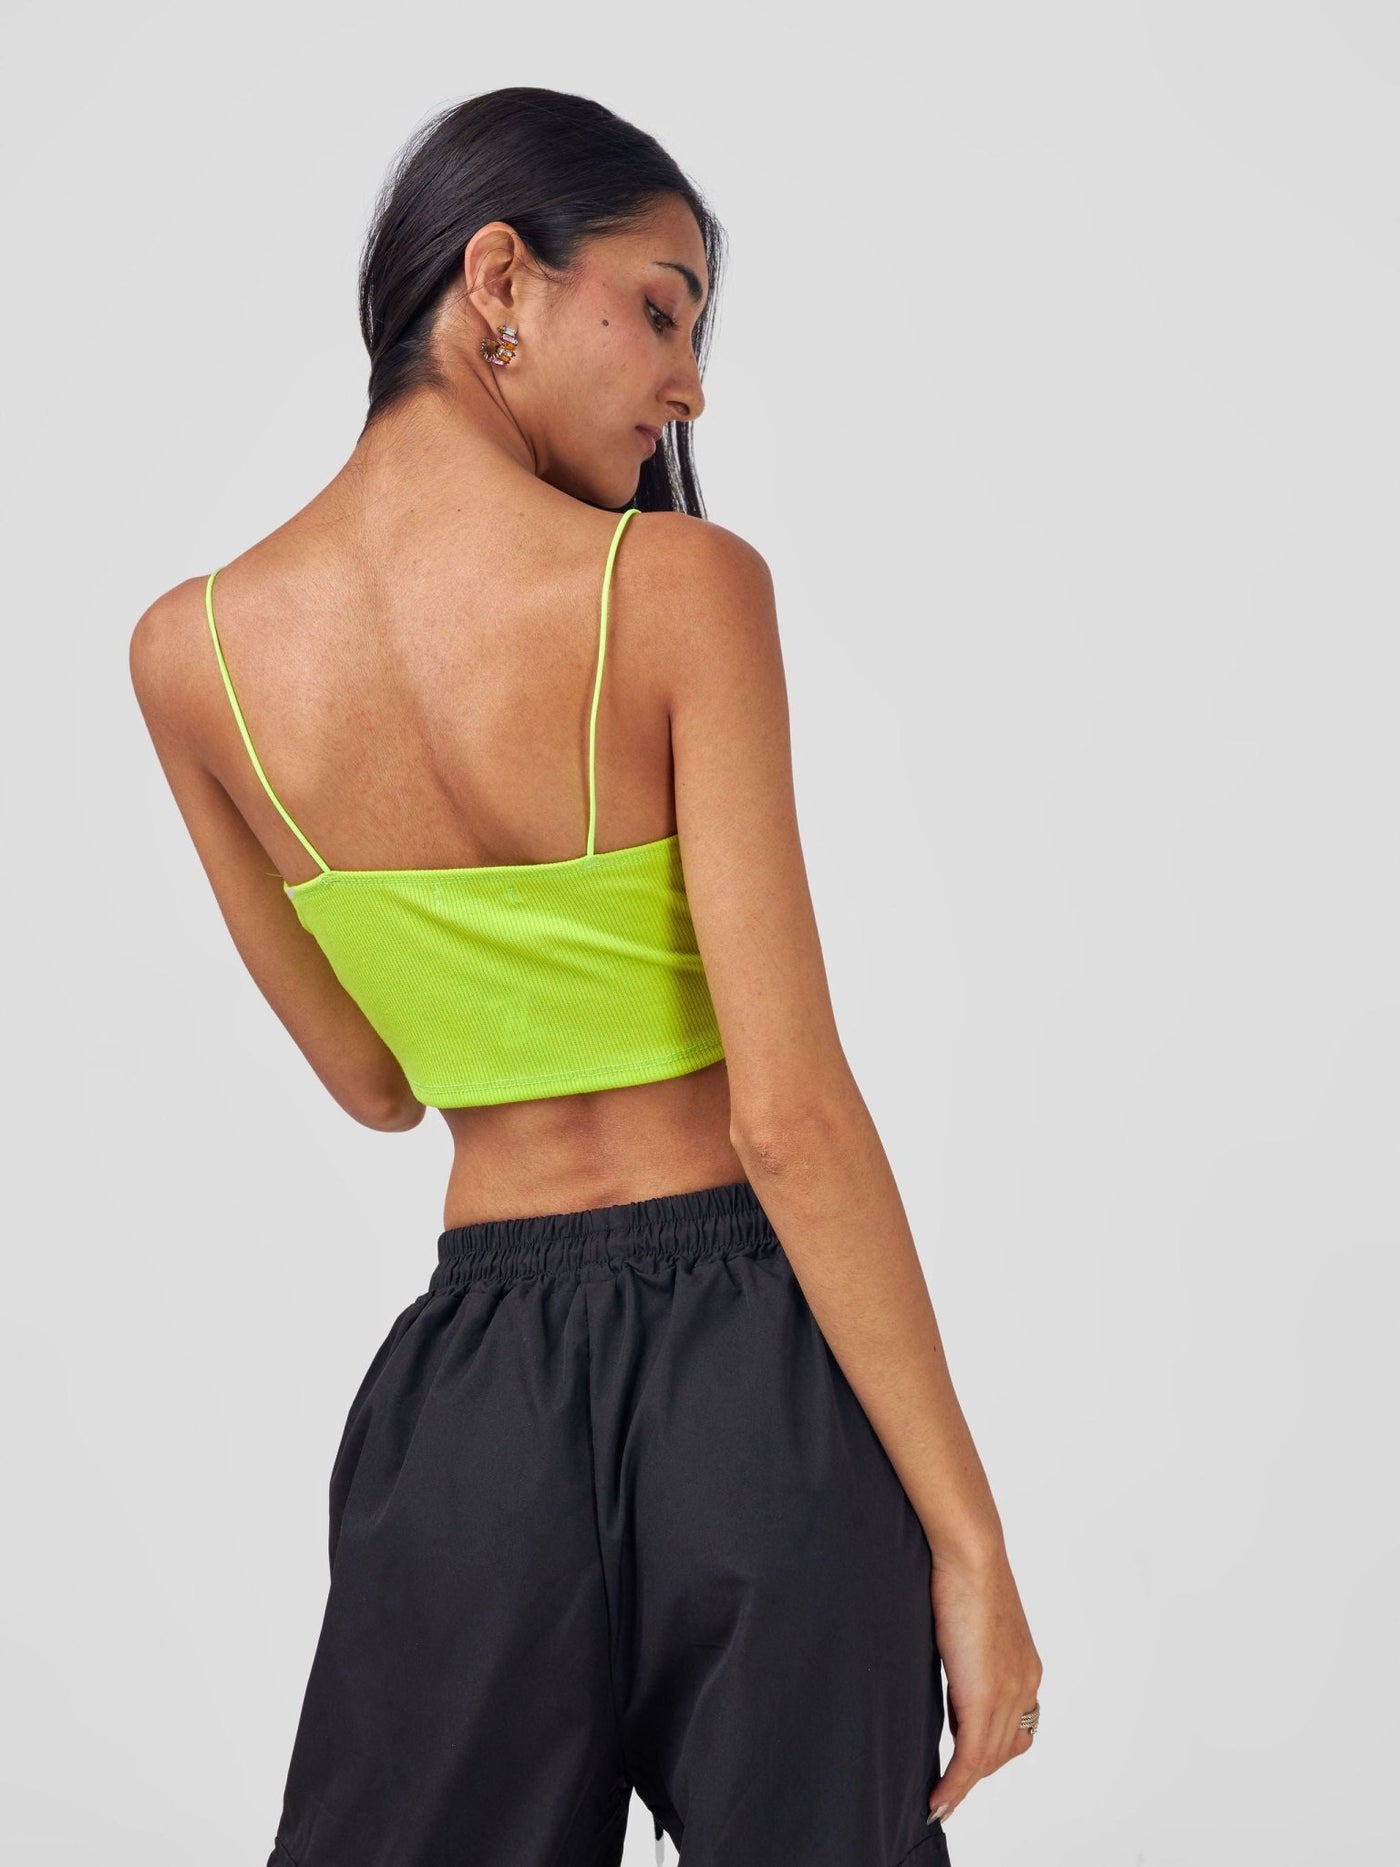 Carrie Wahu X SZ Seam Detailed Corset Crop Top With Asymmetrical Hem& Thin Straps - Neon Green - Shopzetu